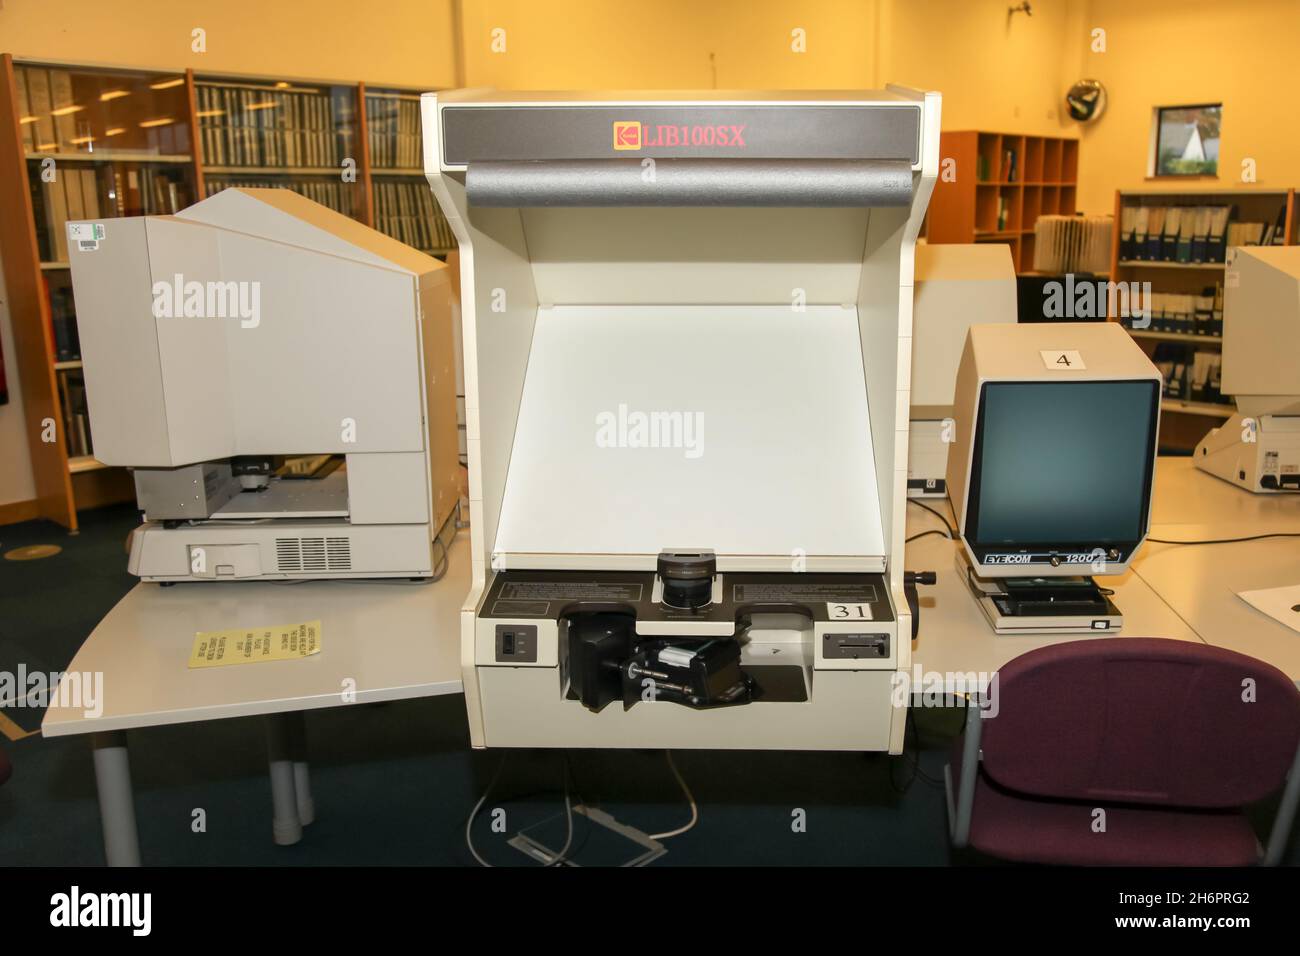 Kodak LIB100SX microfiche reader, research equipment, Surrey History Centre, Woking, Surrey, England, UK, 2021 internal Stock Photo